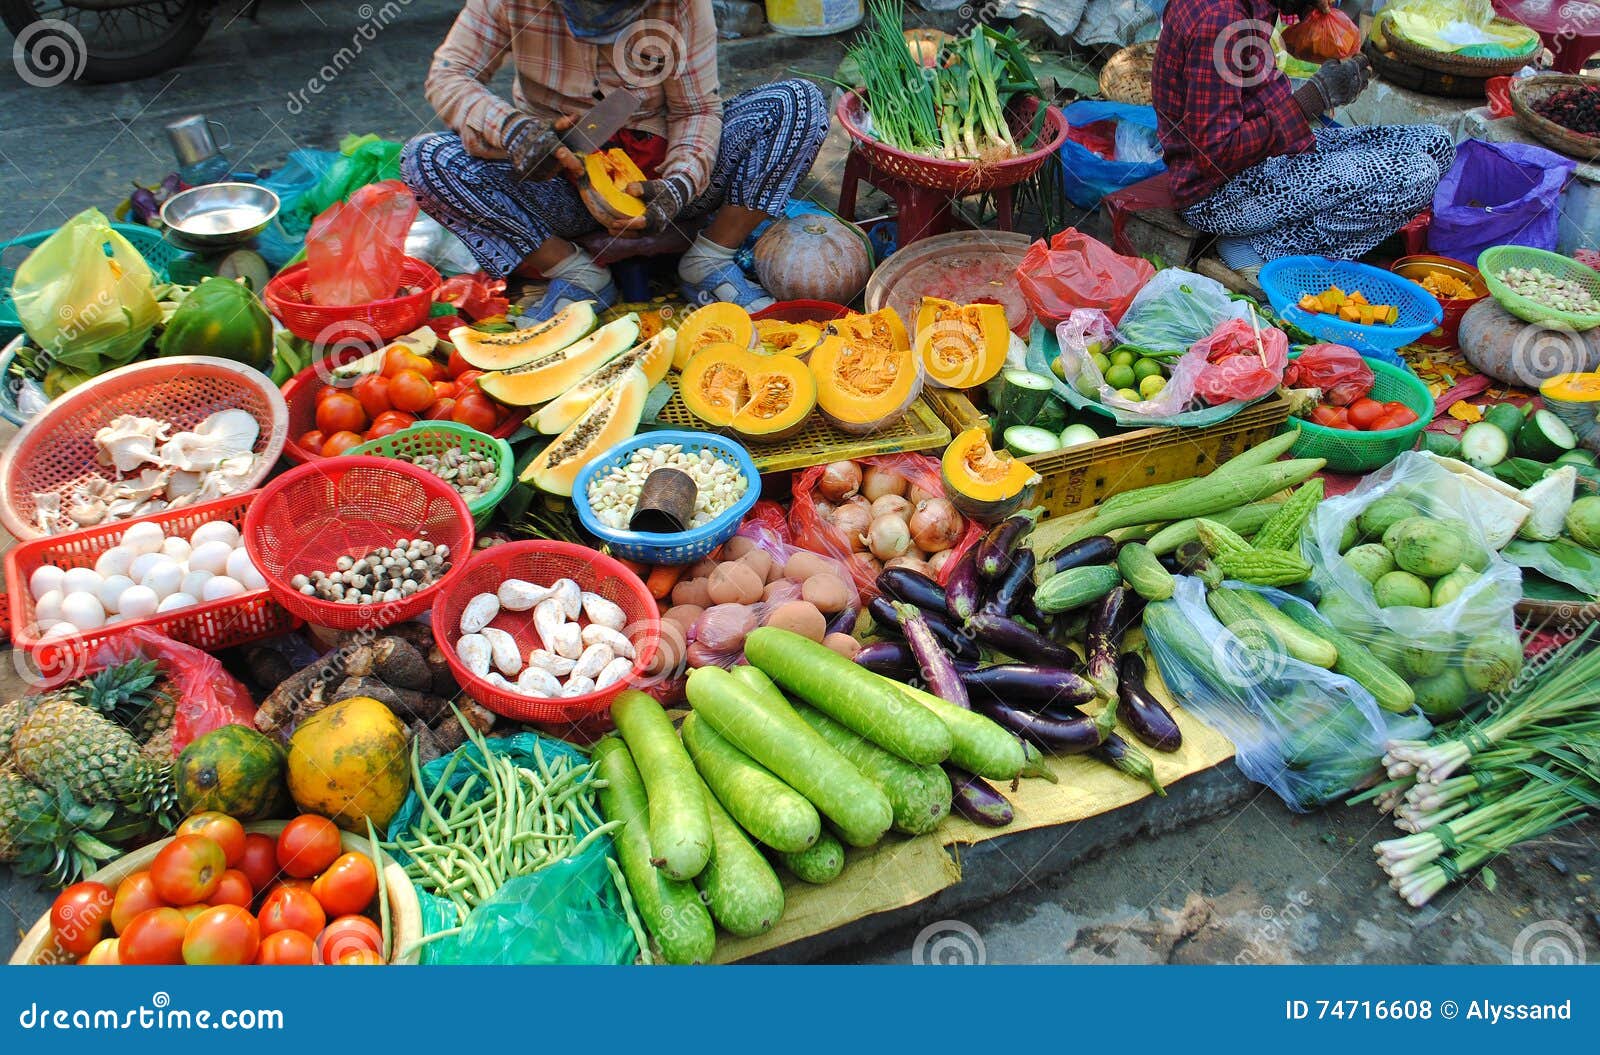 vietnam food market